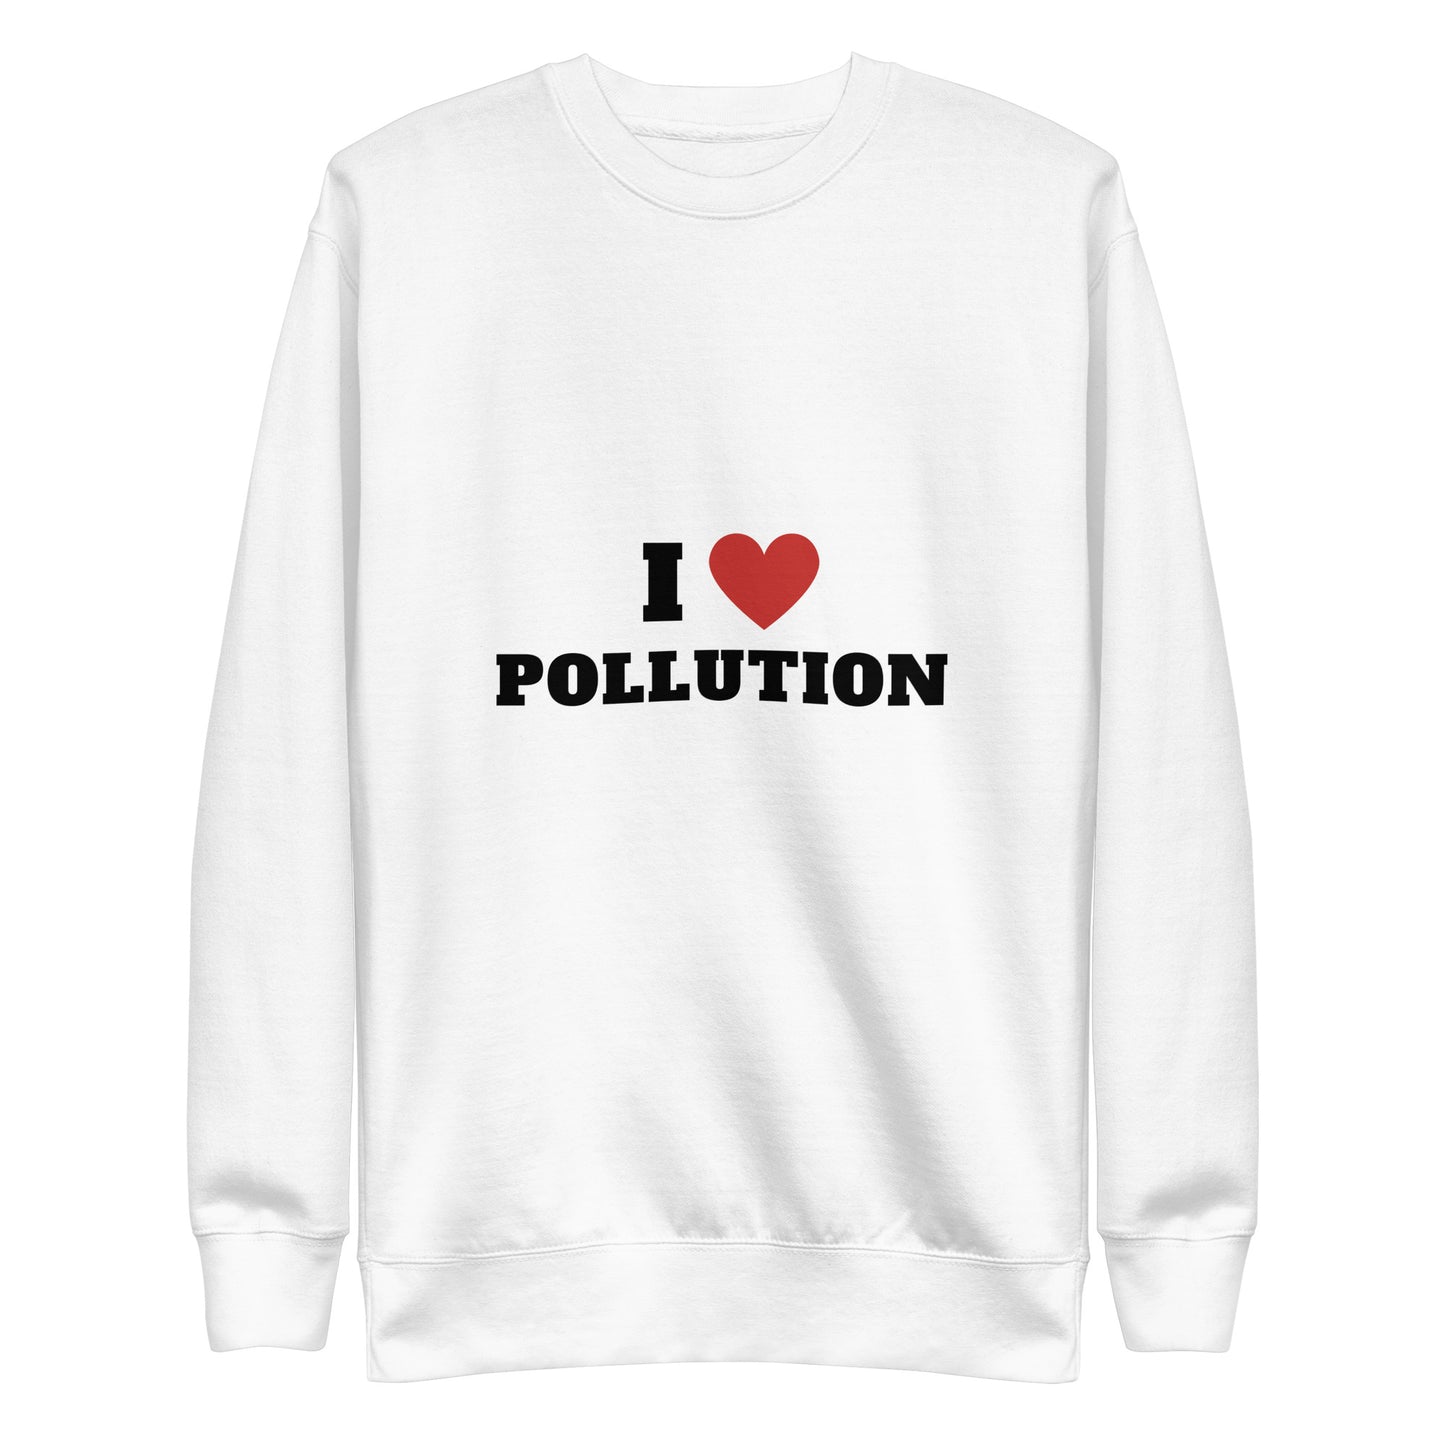 Pollution Sweatshirt